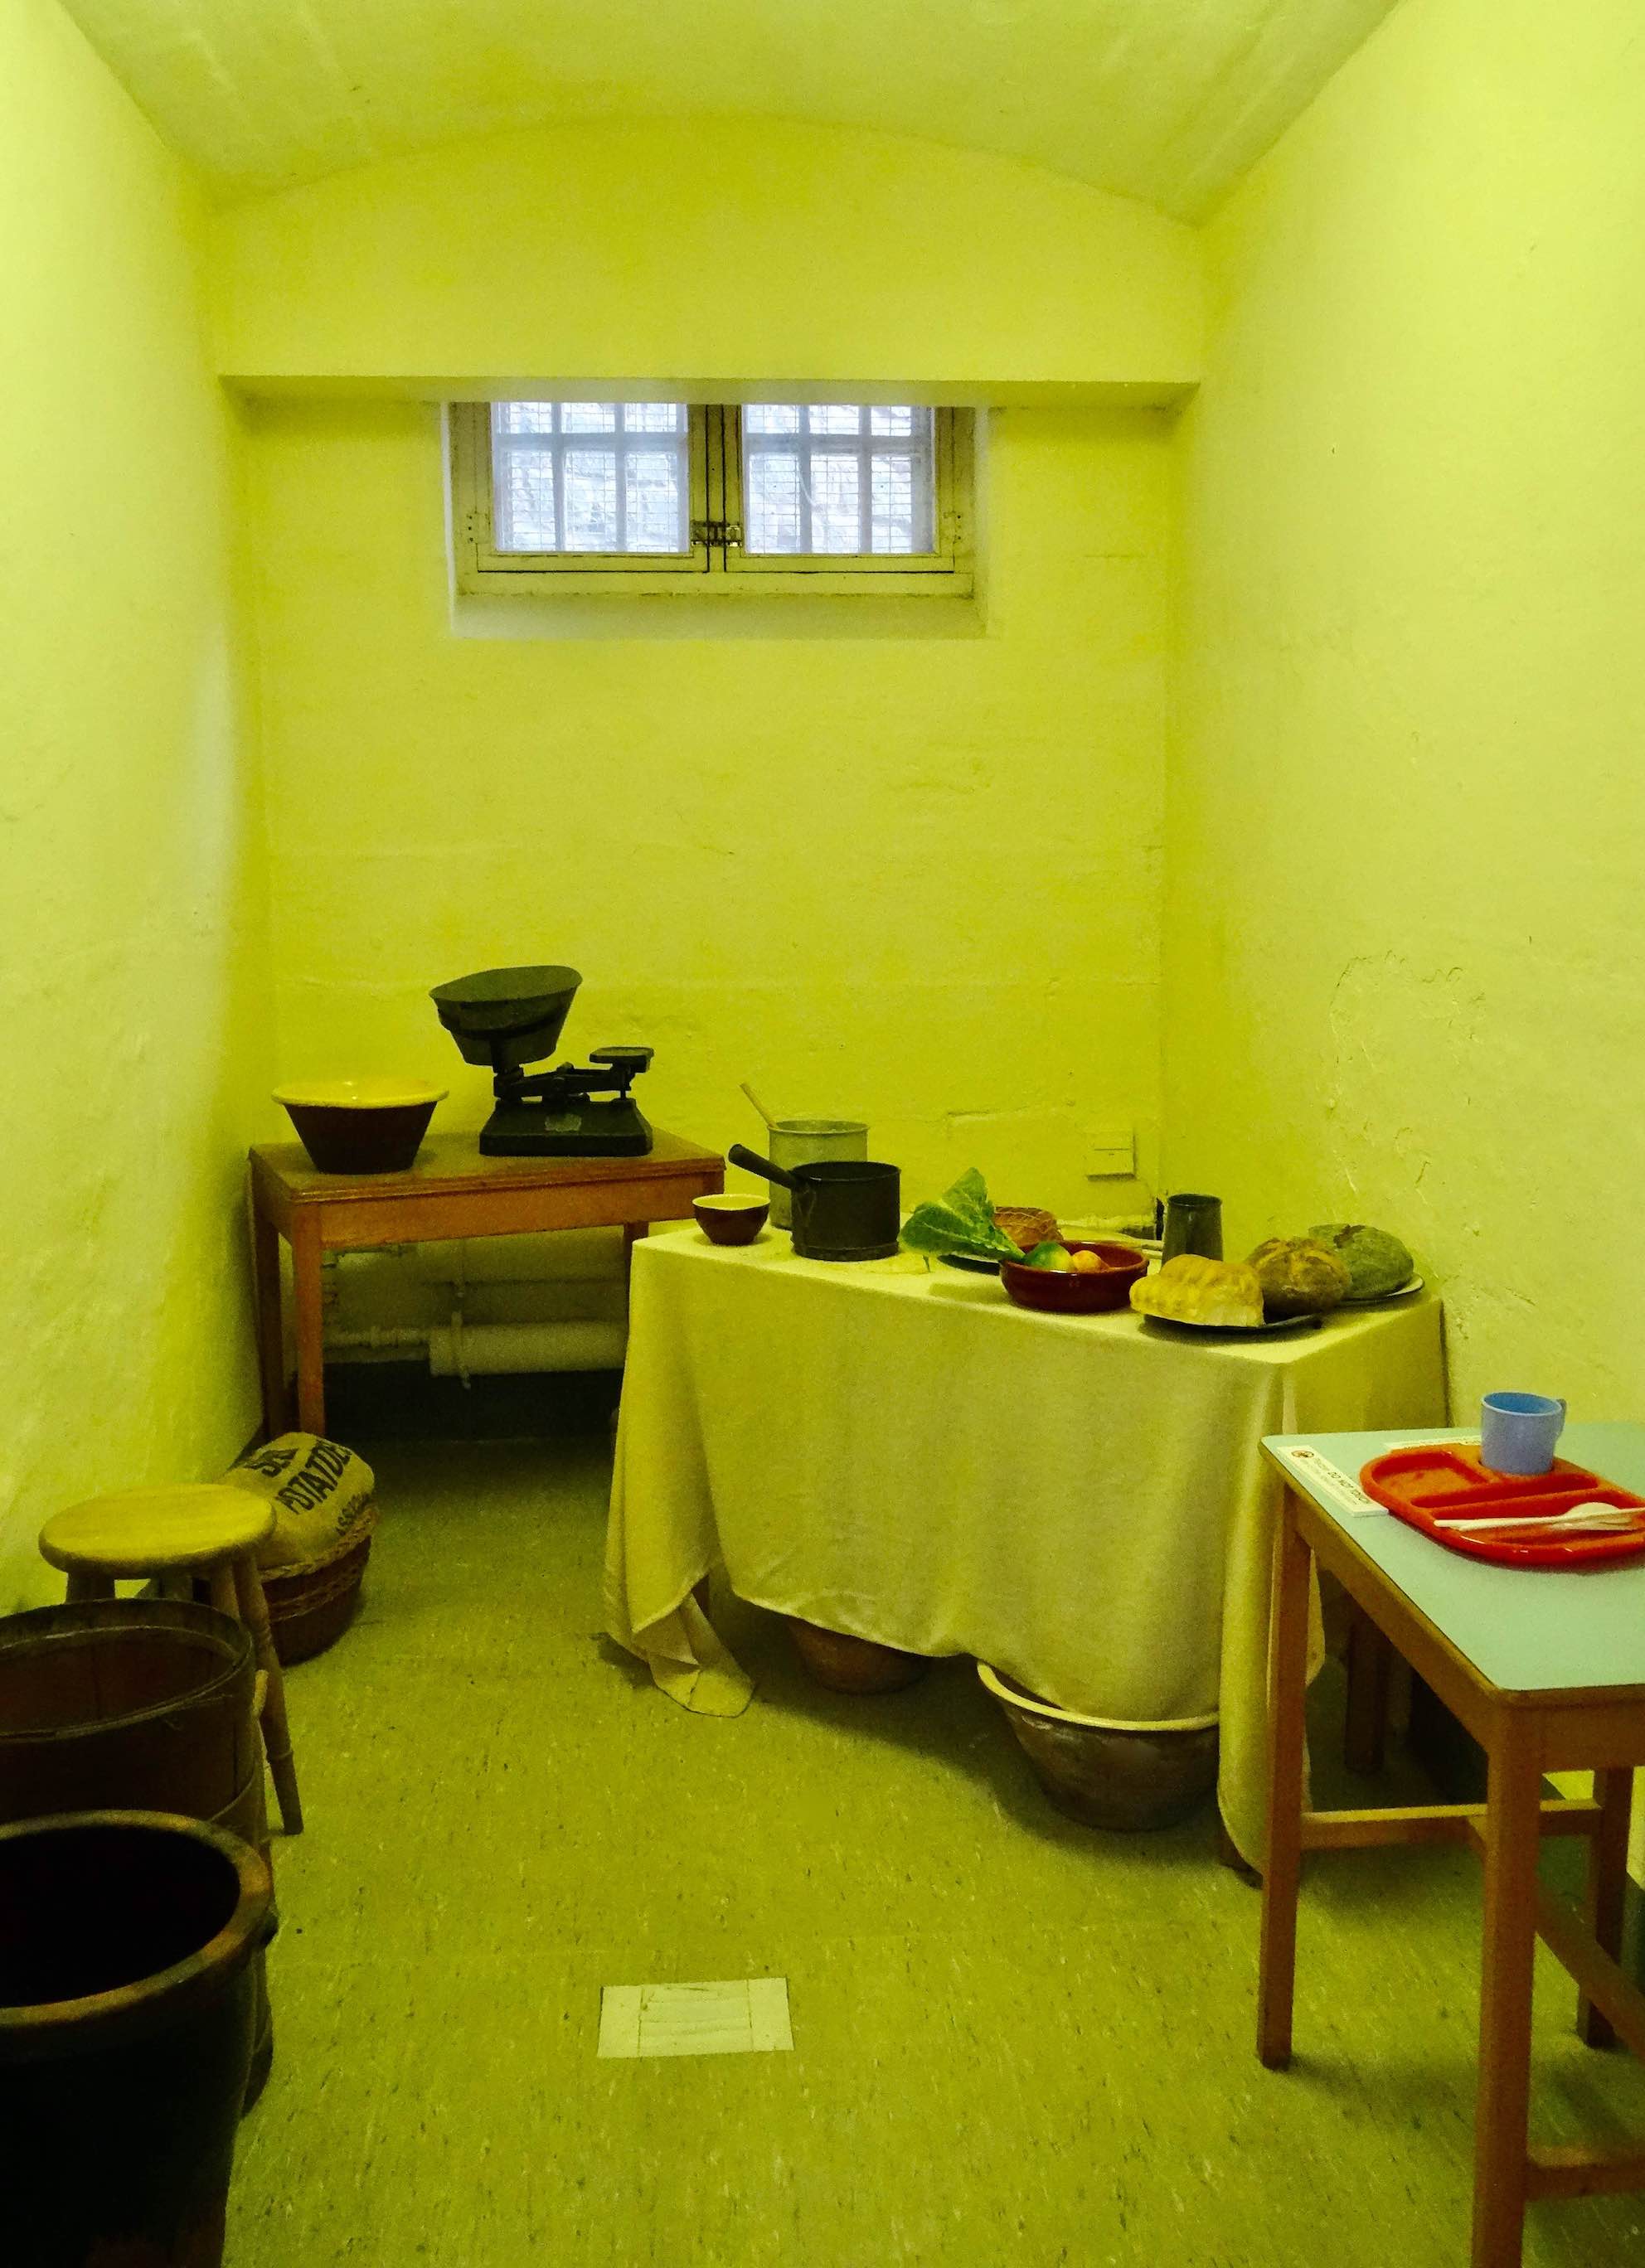 Pantry display Lancaster Castle Prison.